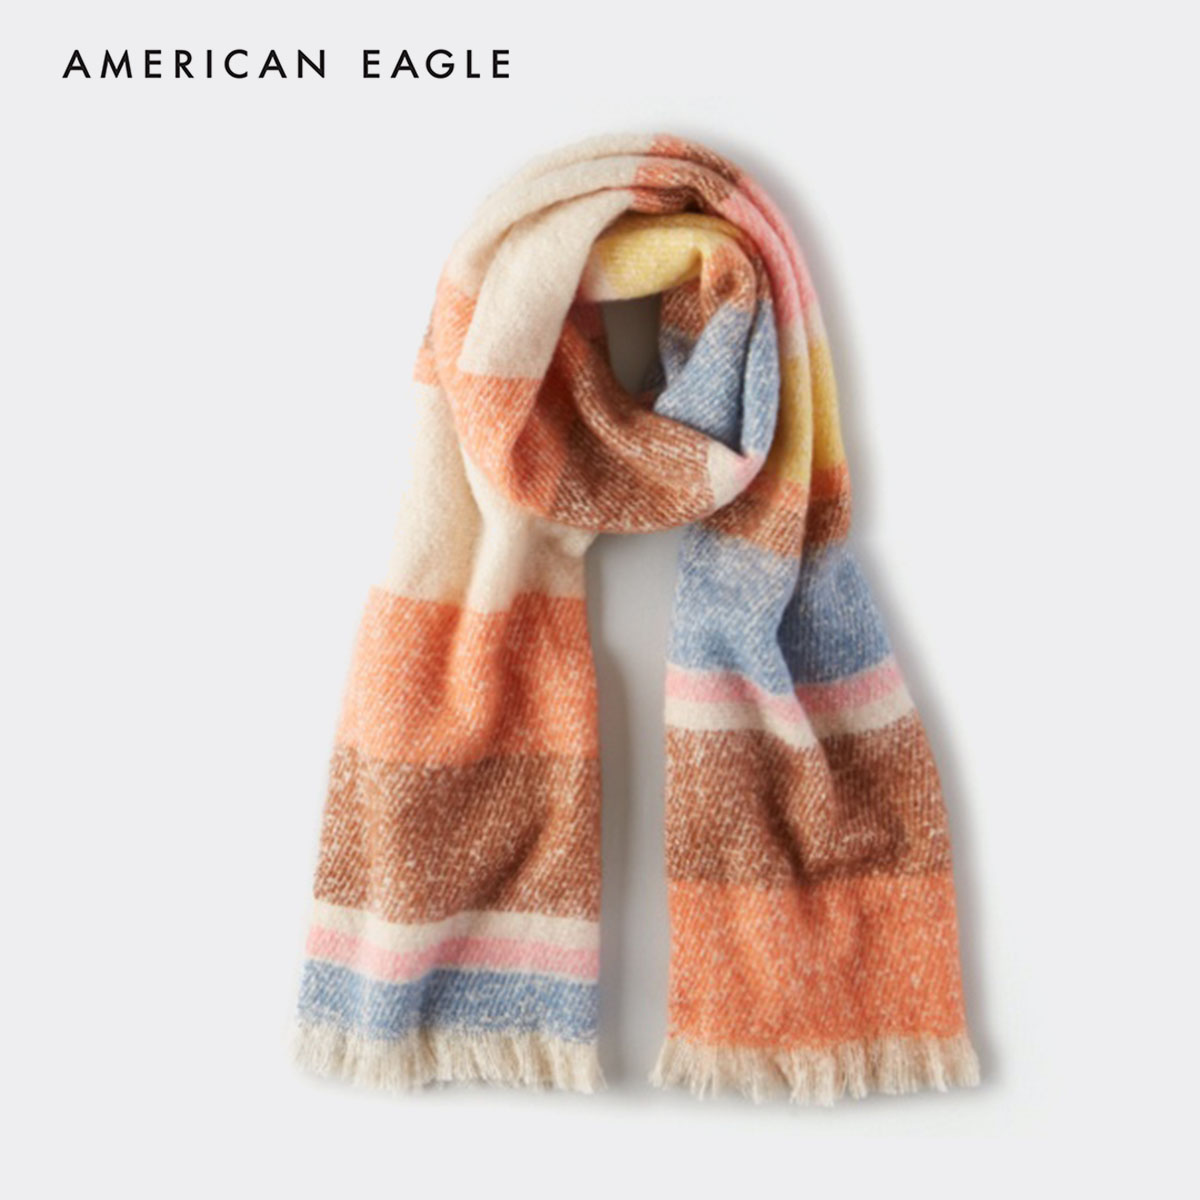 American Eagle Striped Blanket Scarf ผ้าพันคอ ผู้หญิง ลายตรง(042-9571-900)